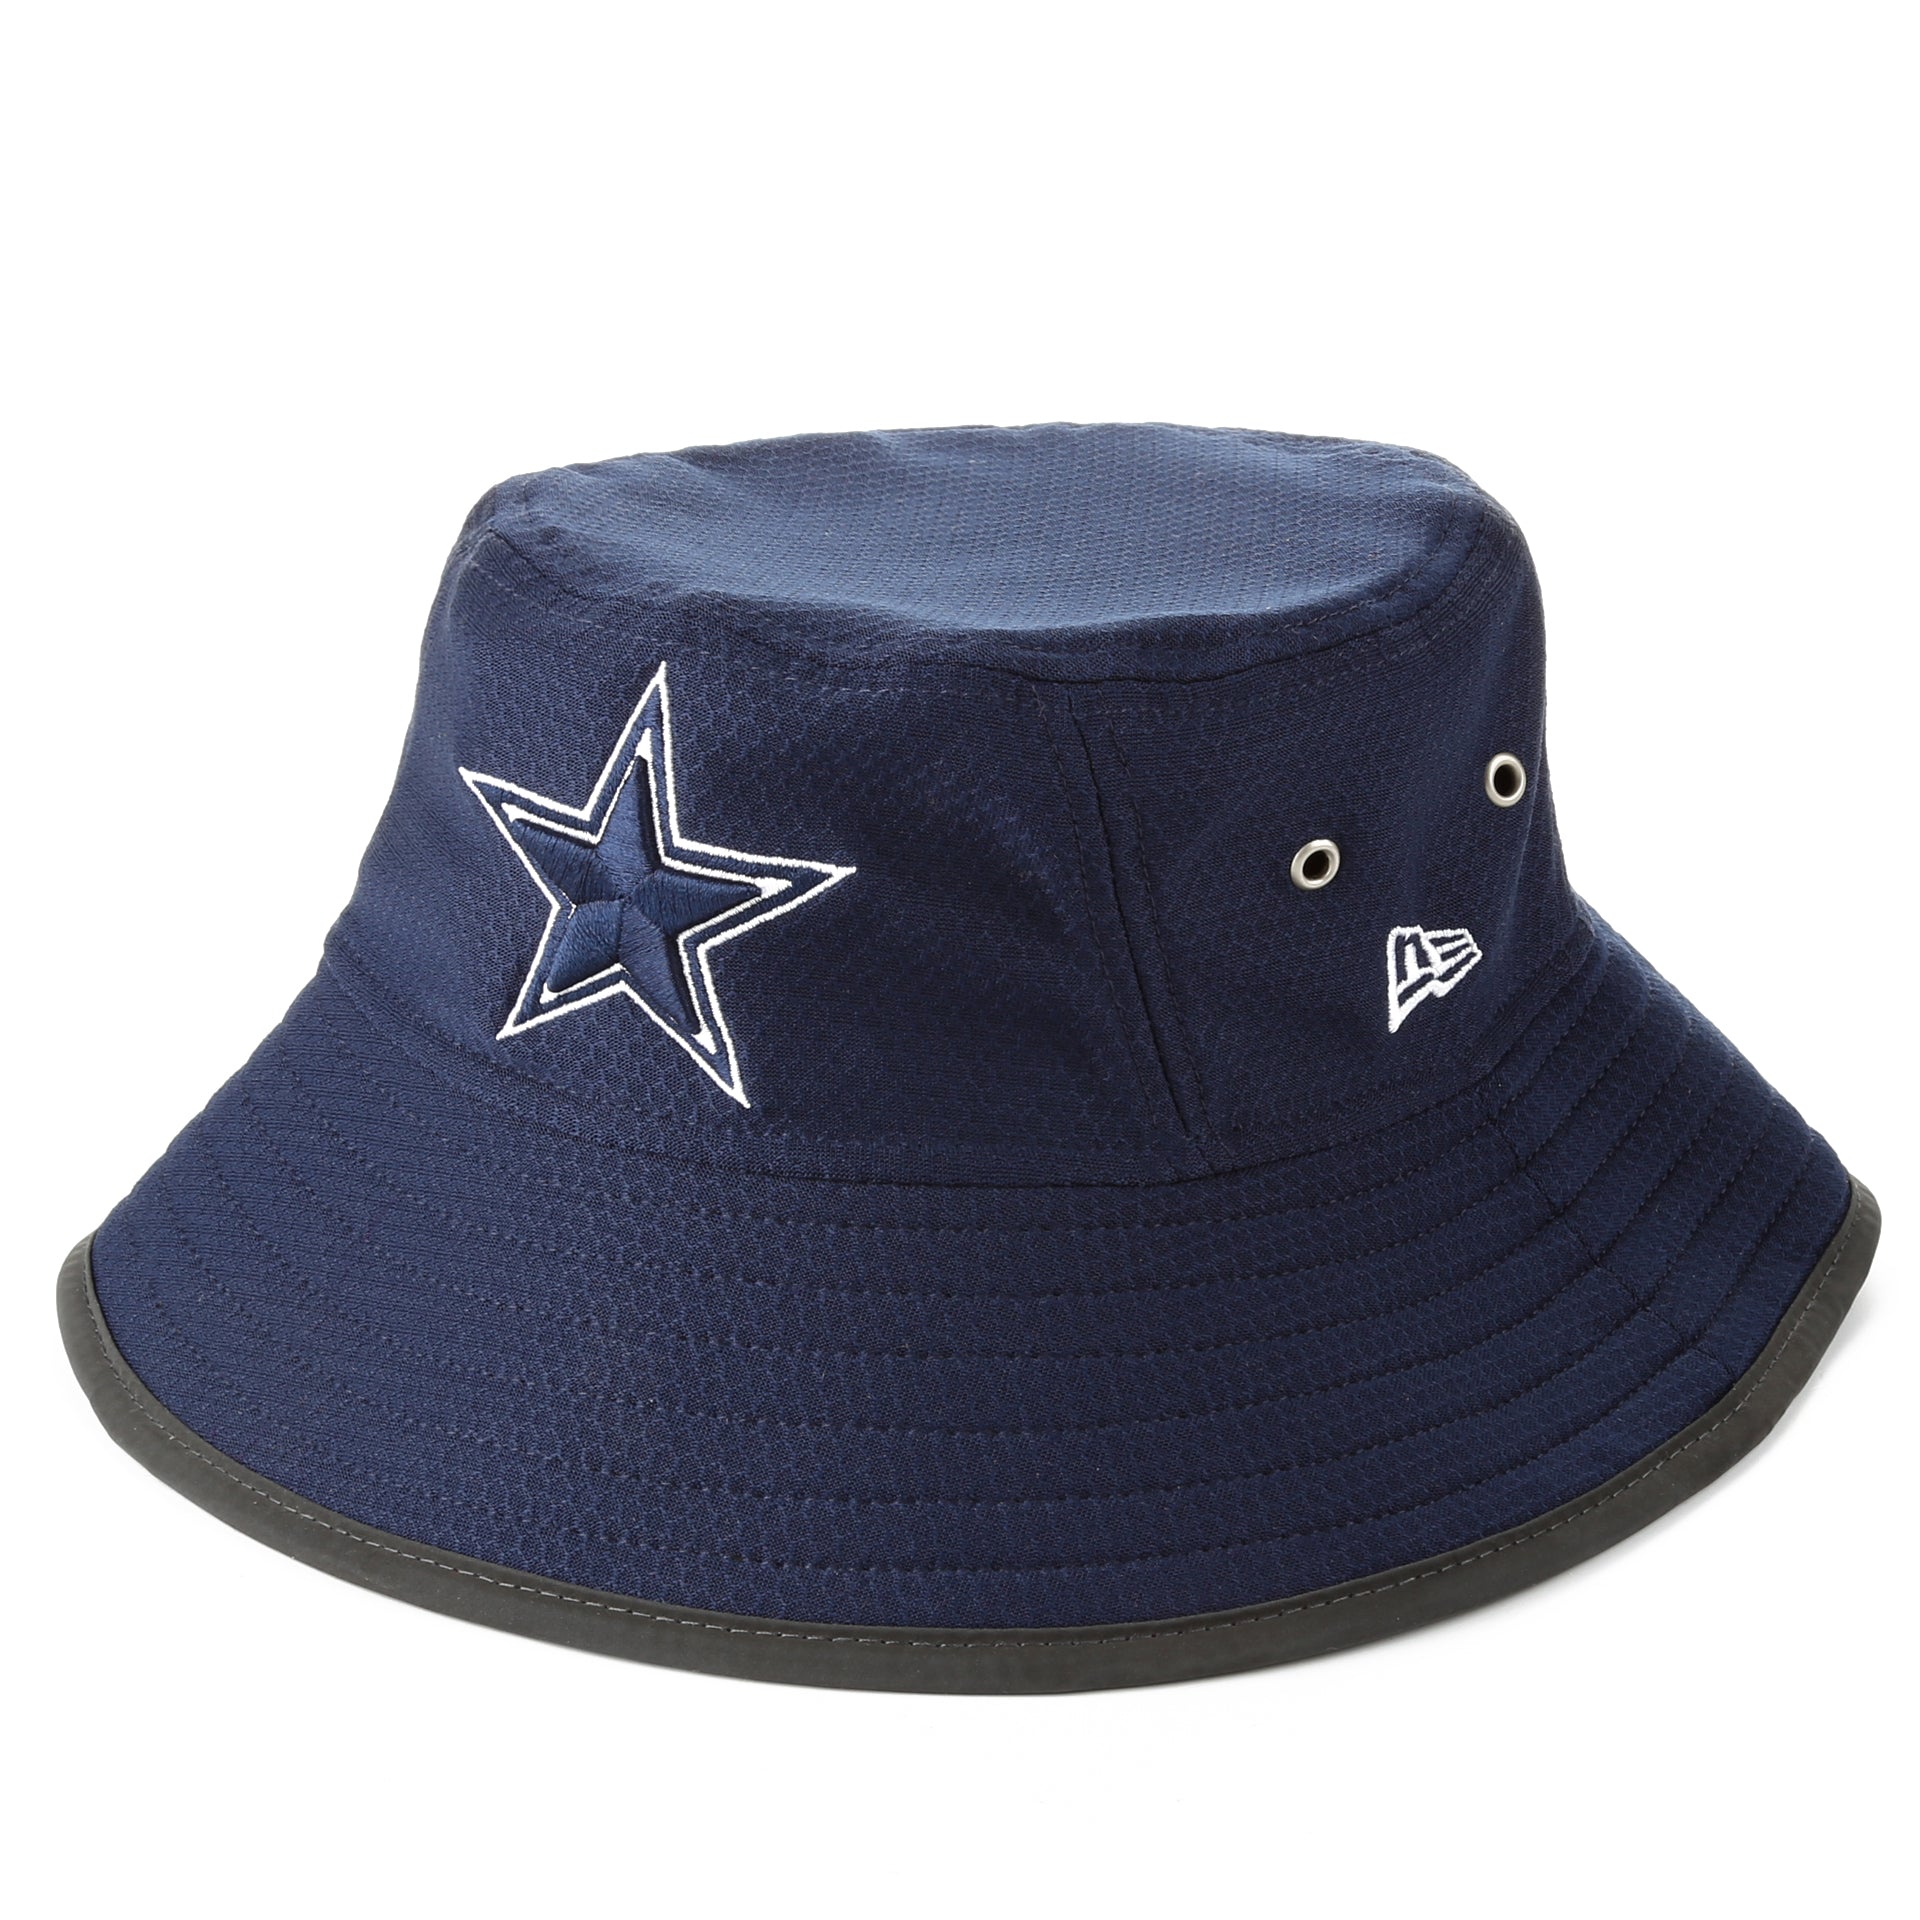 New Era On Field Bucket Hat - Dallas Cowboys/Navy - New Star